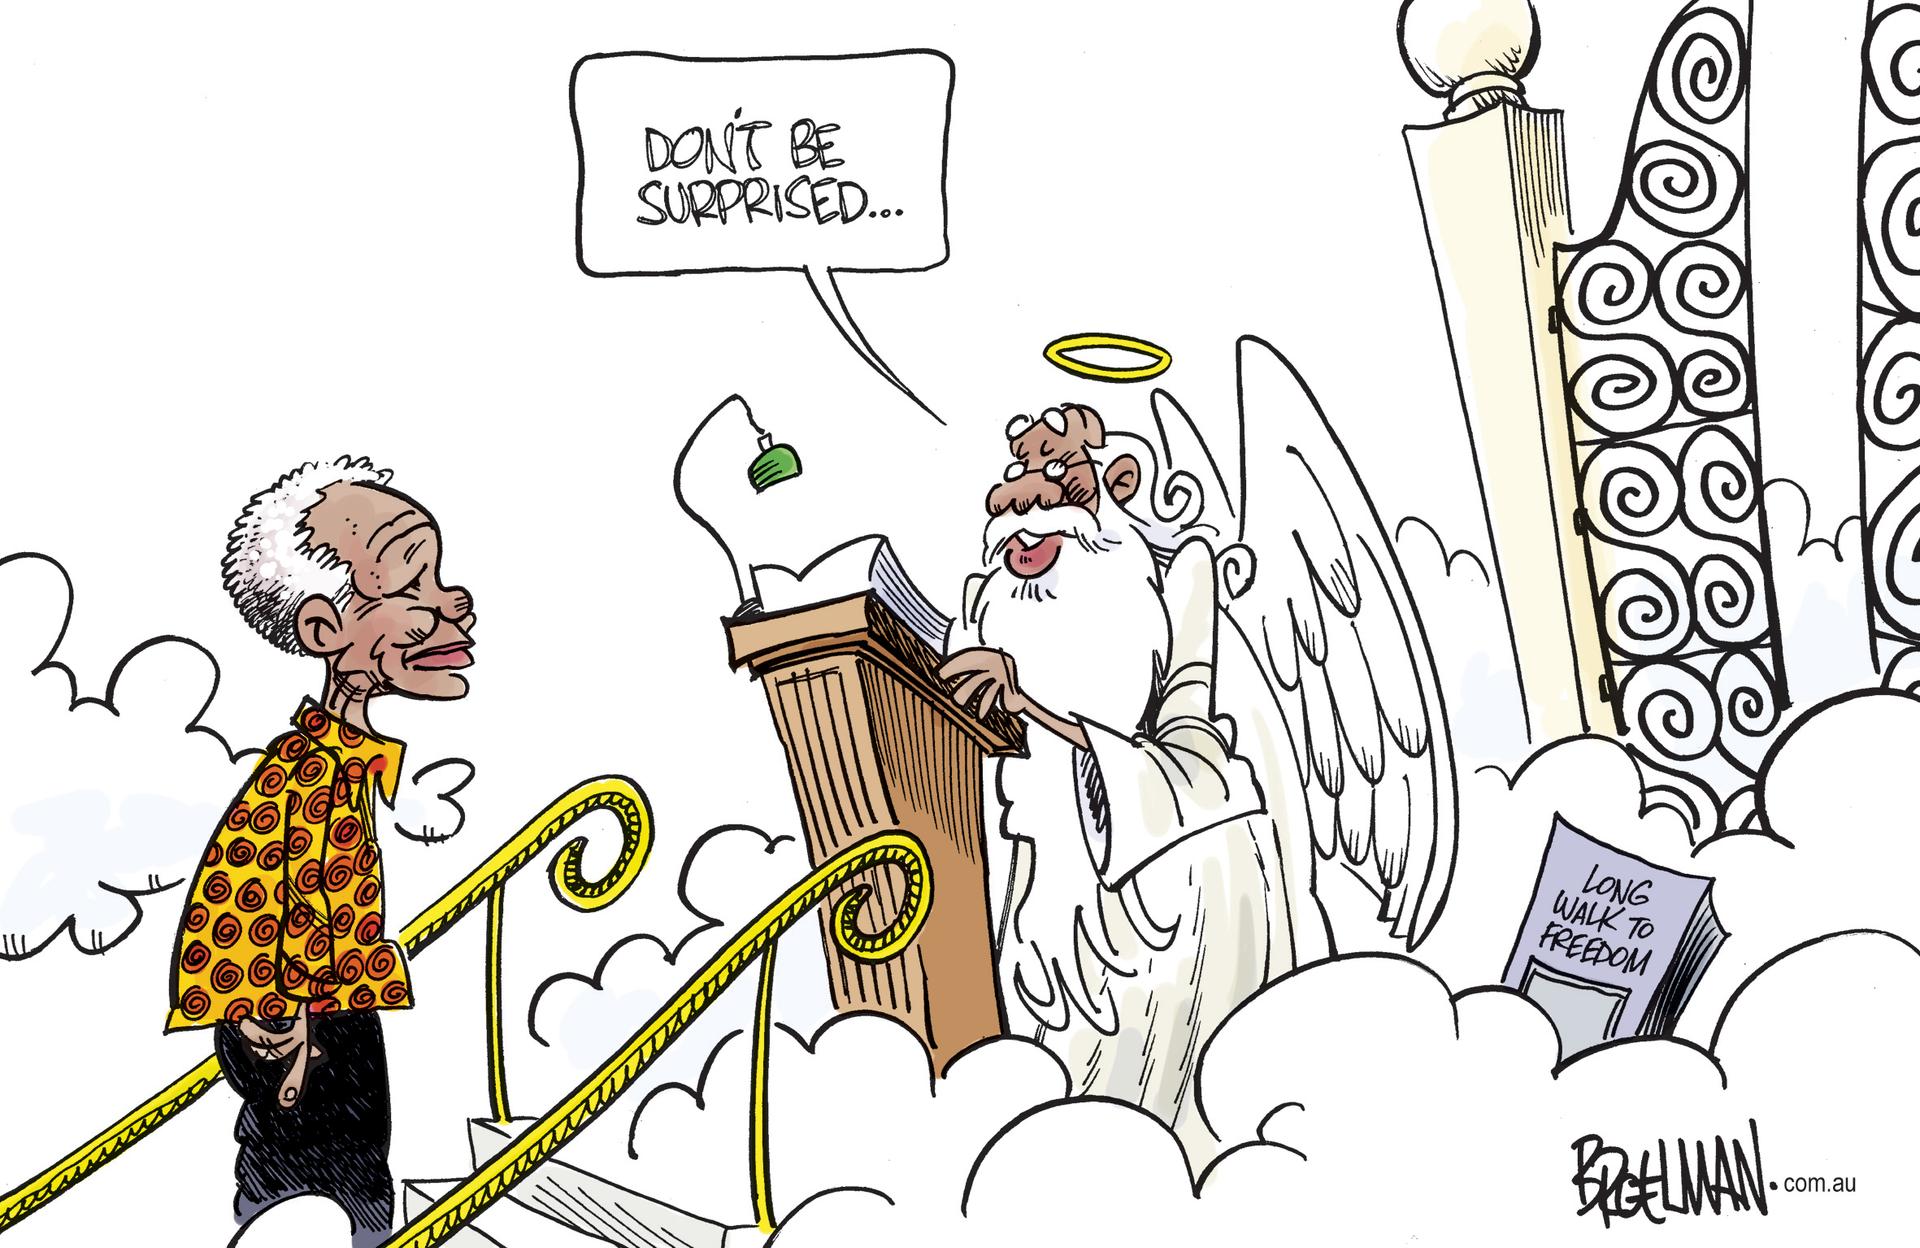 Nelson Mandela at Heaven's gates